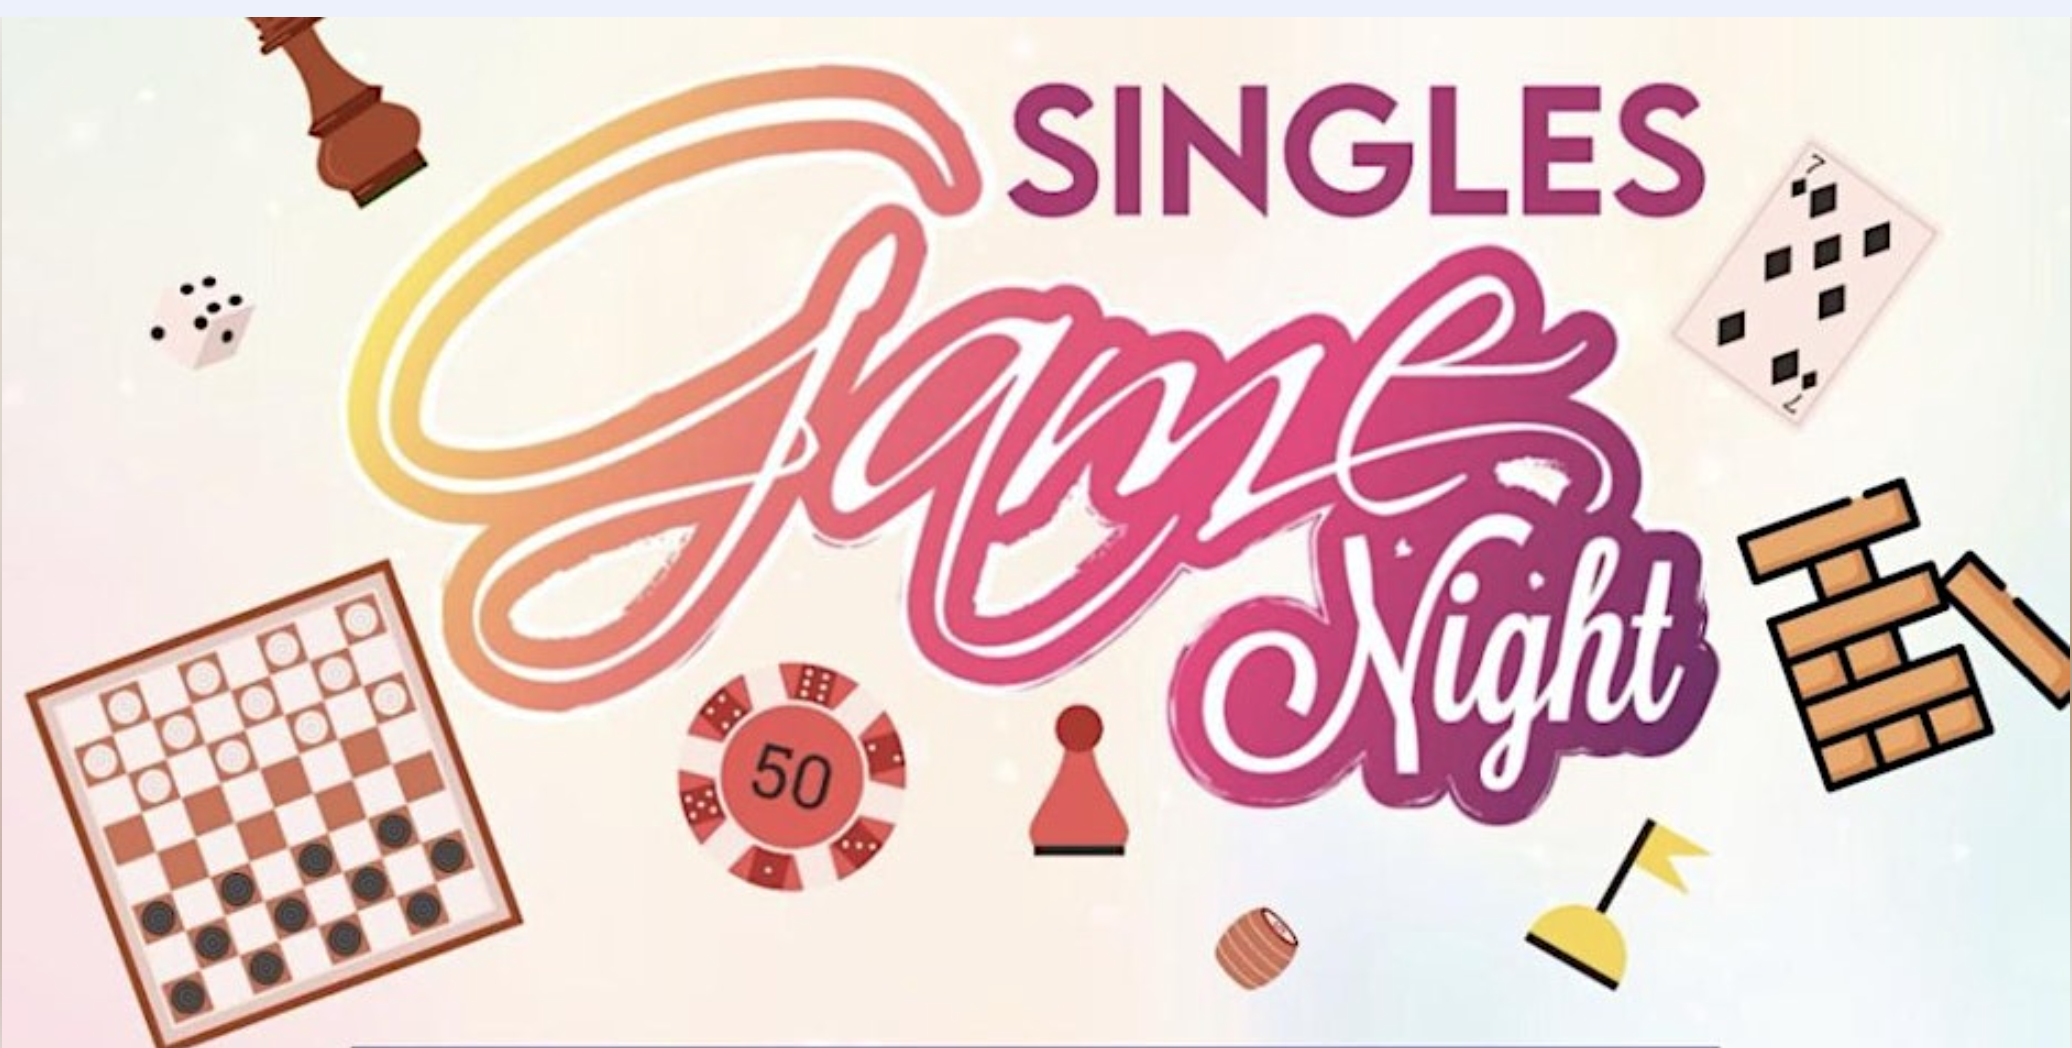 Arab singles mingle Game night!